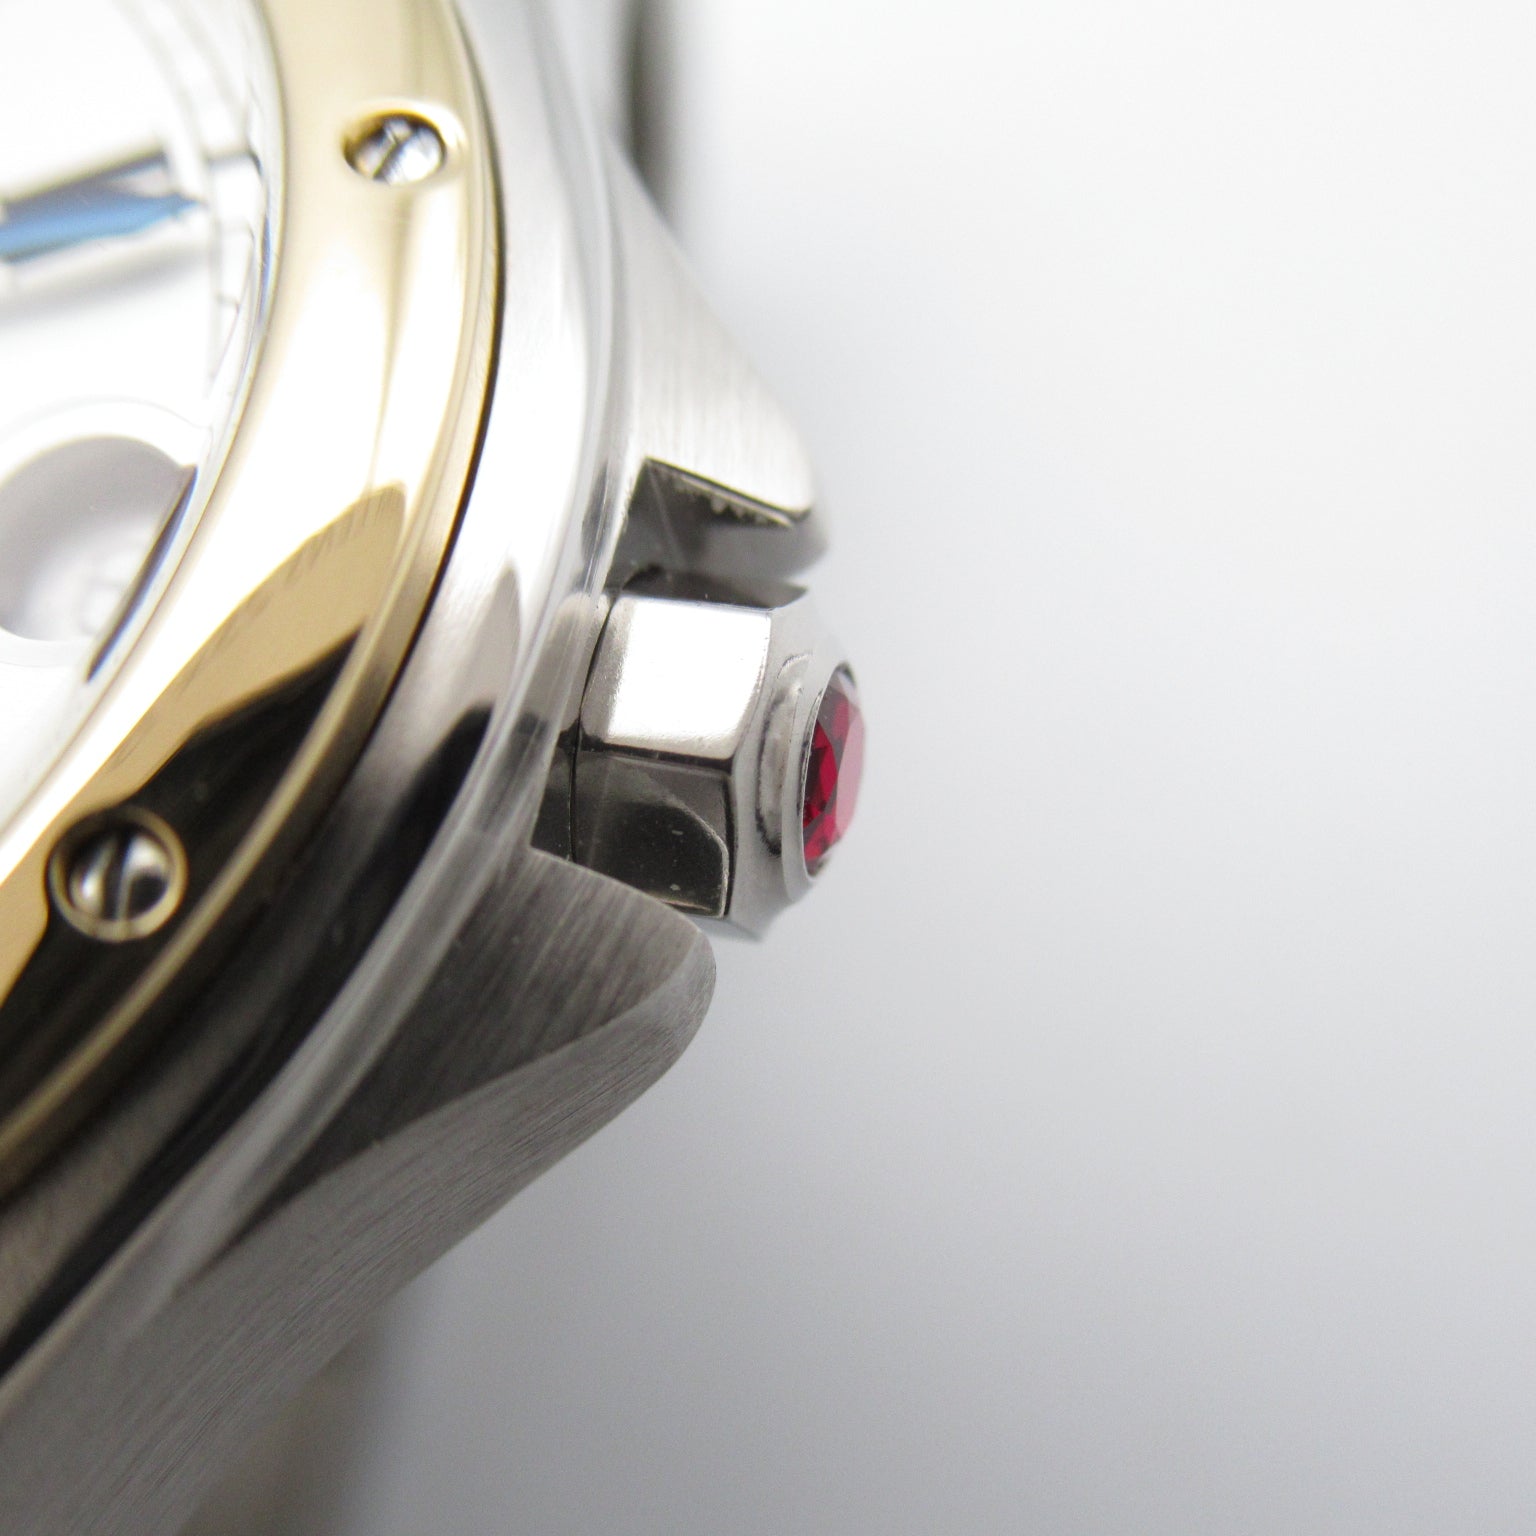 Cartier Santos GMT Watch K18 (Yellow G) Stainless Steel  Silver W2038R3